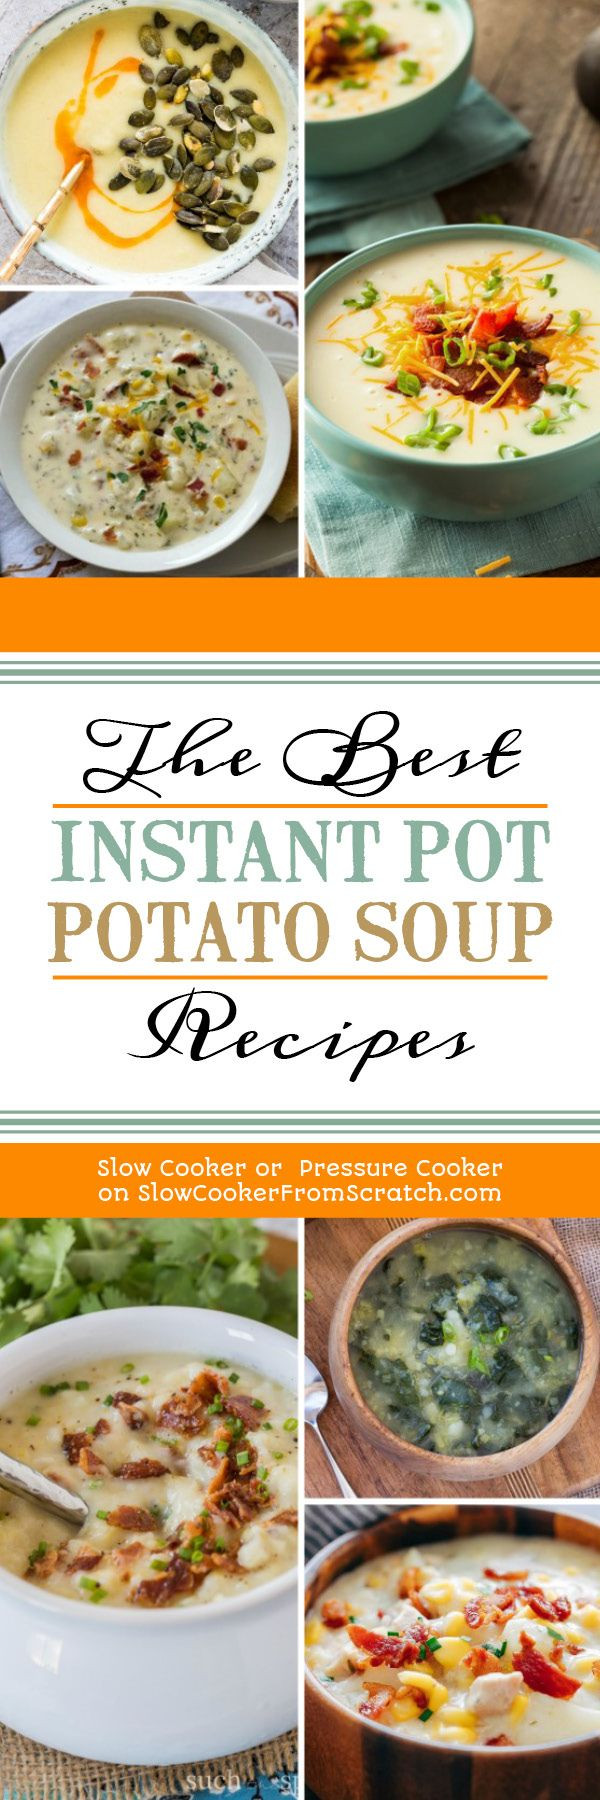 Instant Pot Slow Cooker Recipes
 The BEST Instant Pot Potato Soup Recipes